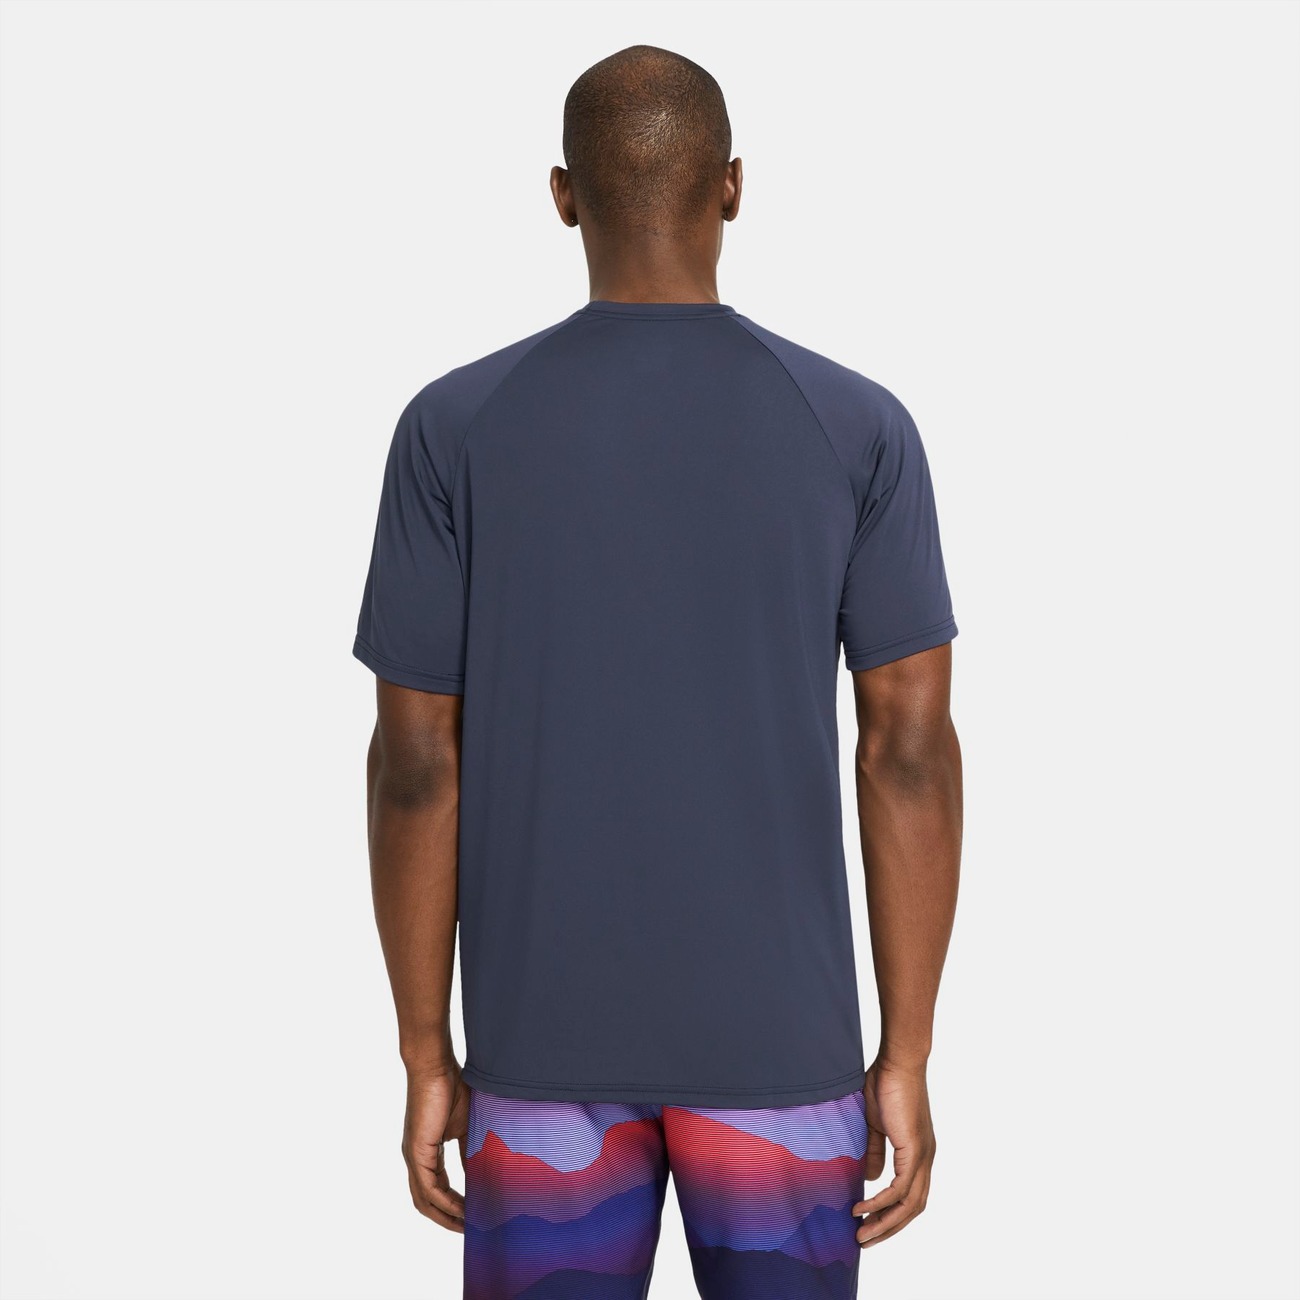 Camiseta Nike Logo Hydroguard UV Masculina - Foto 2